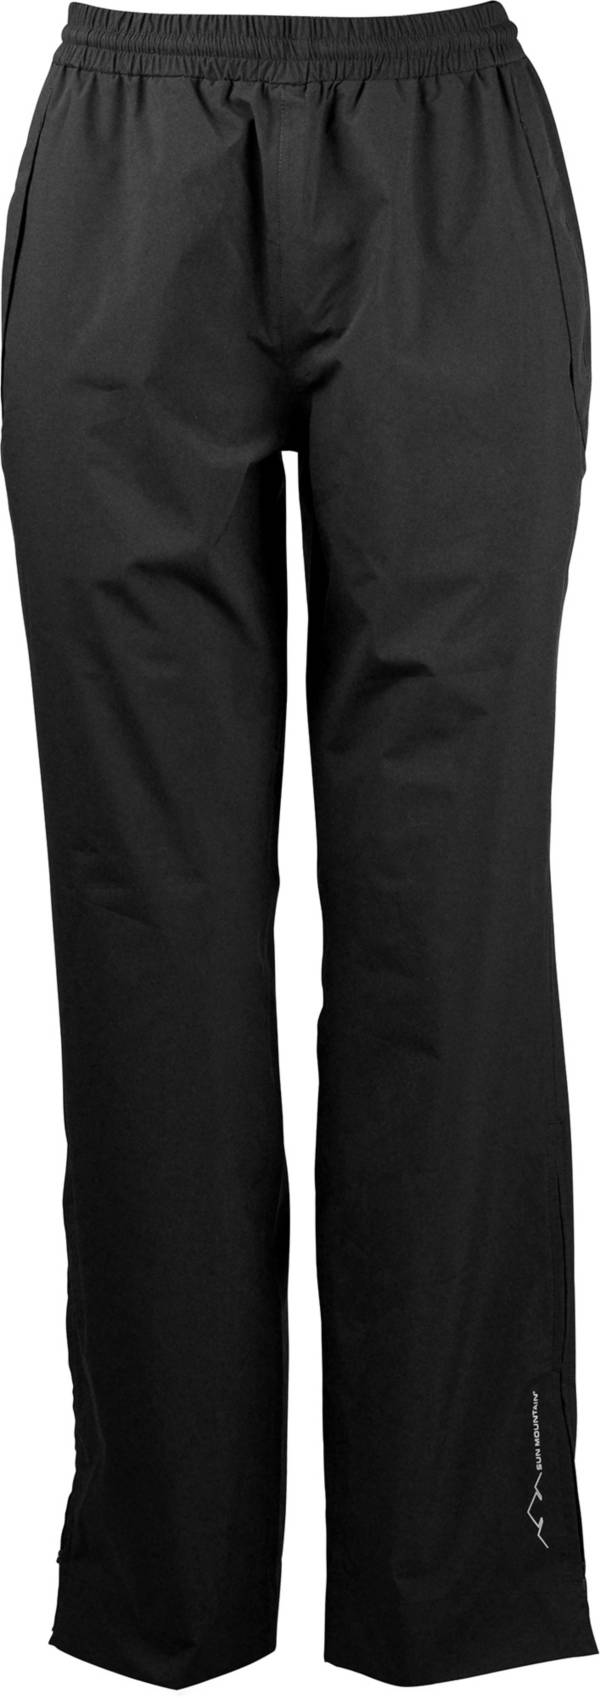 Sun Mountain Men's Monsoon Waterproof Golf Pants product image